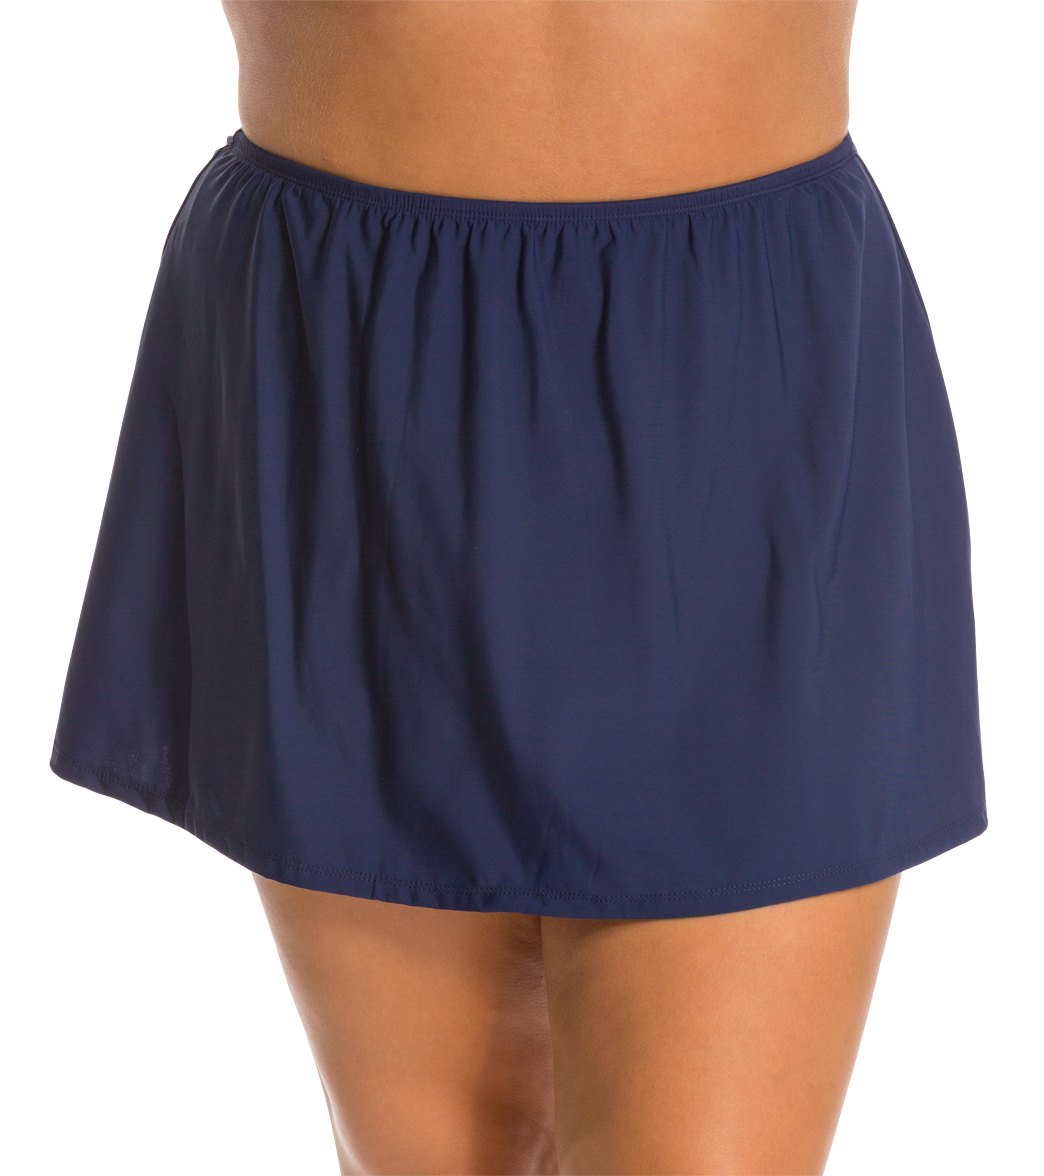 Topanga Plus Size Solid Swim Skirt - Navy 20W Nylon/Spandex - Swimoutlet.com